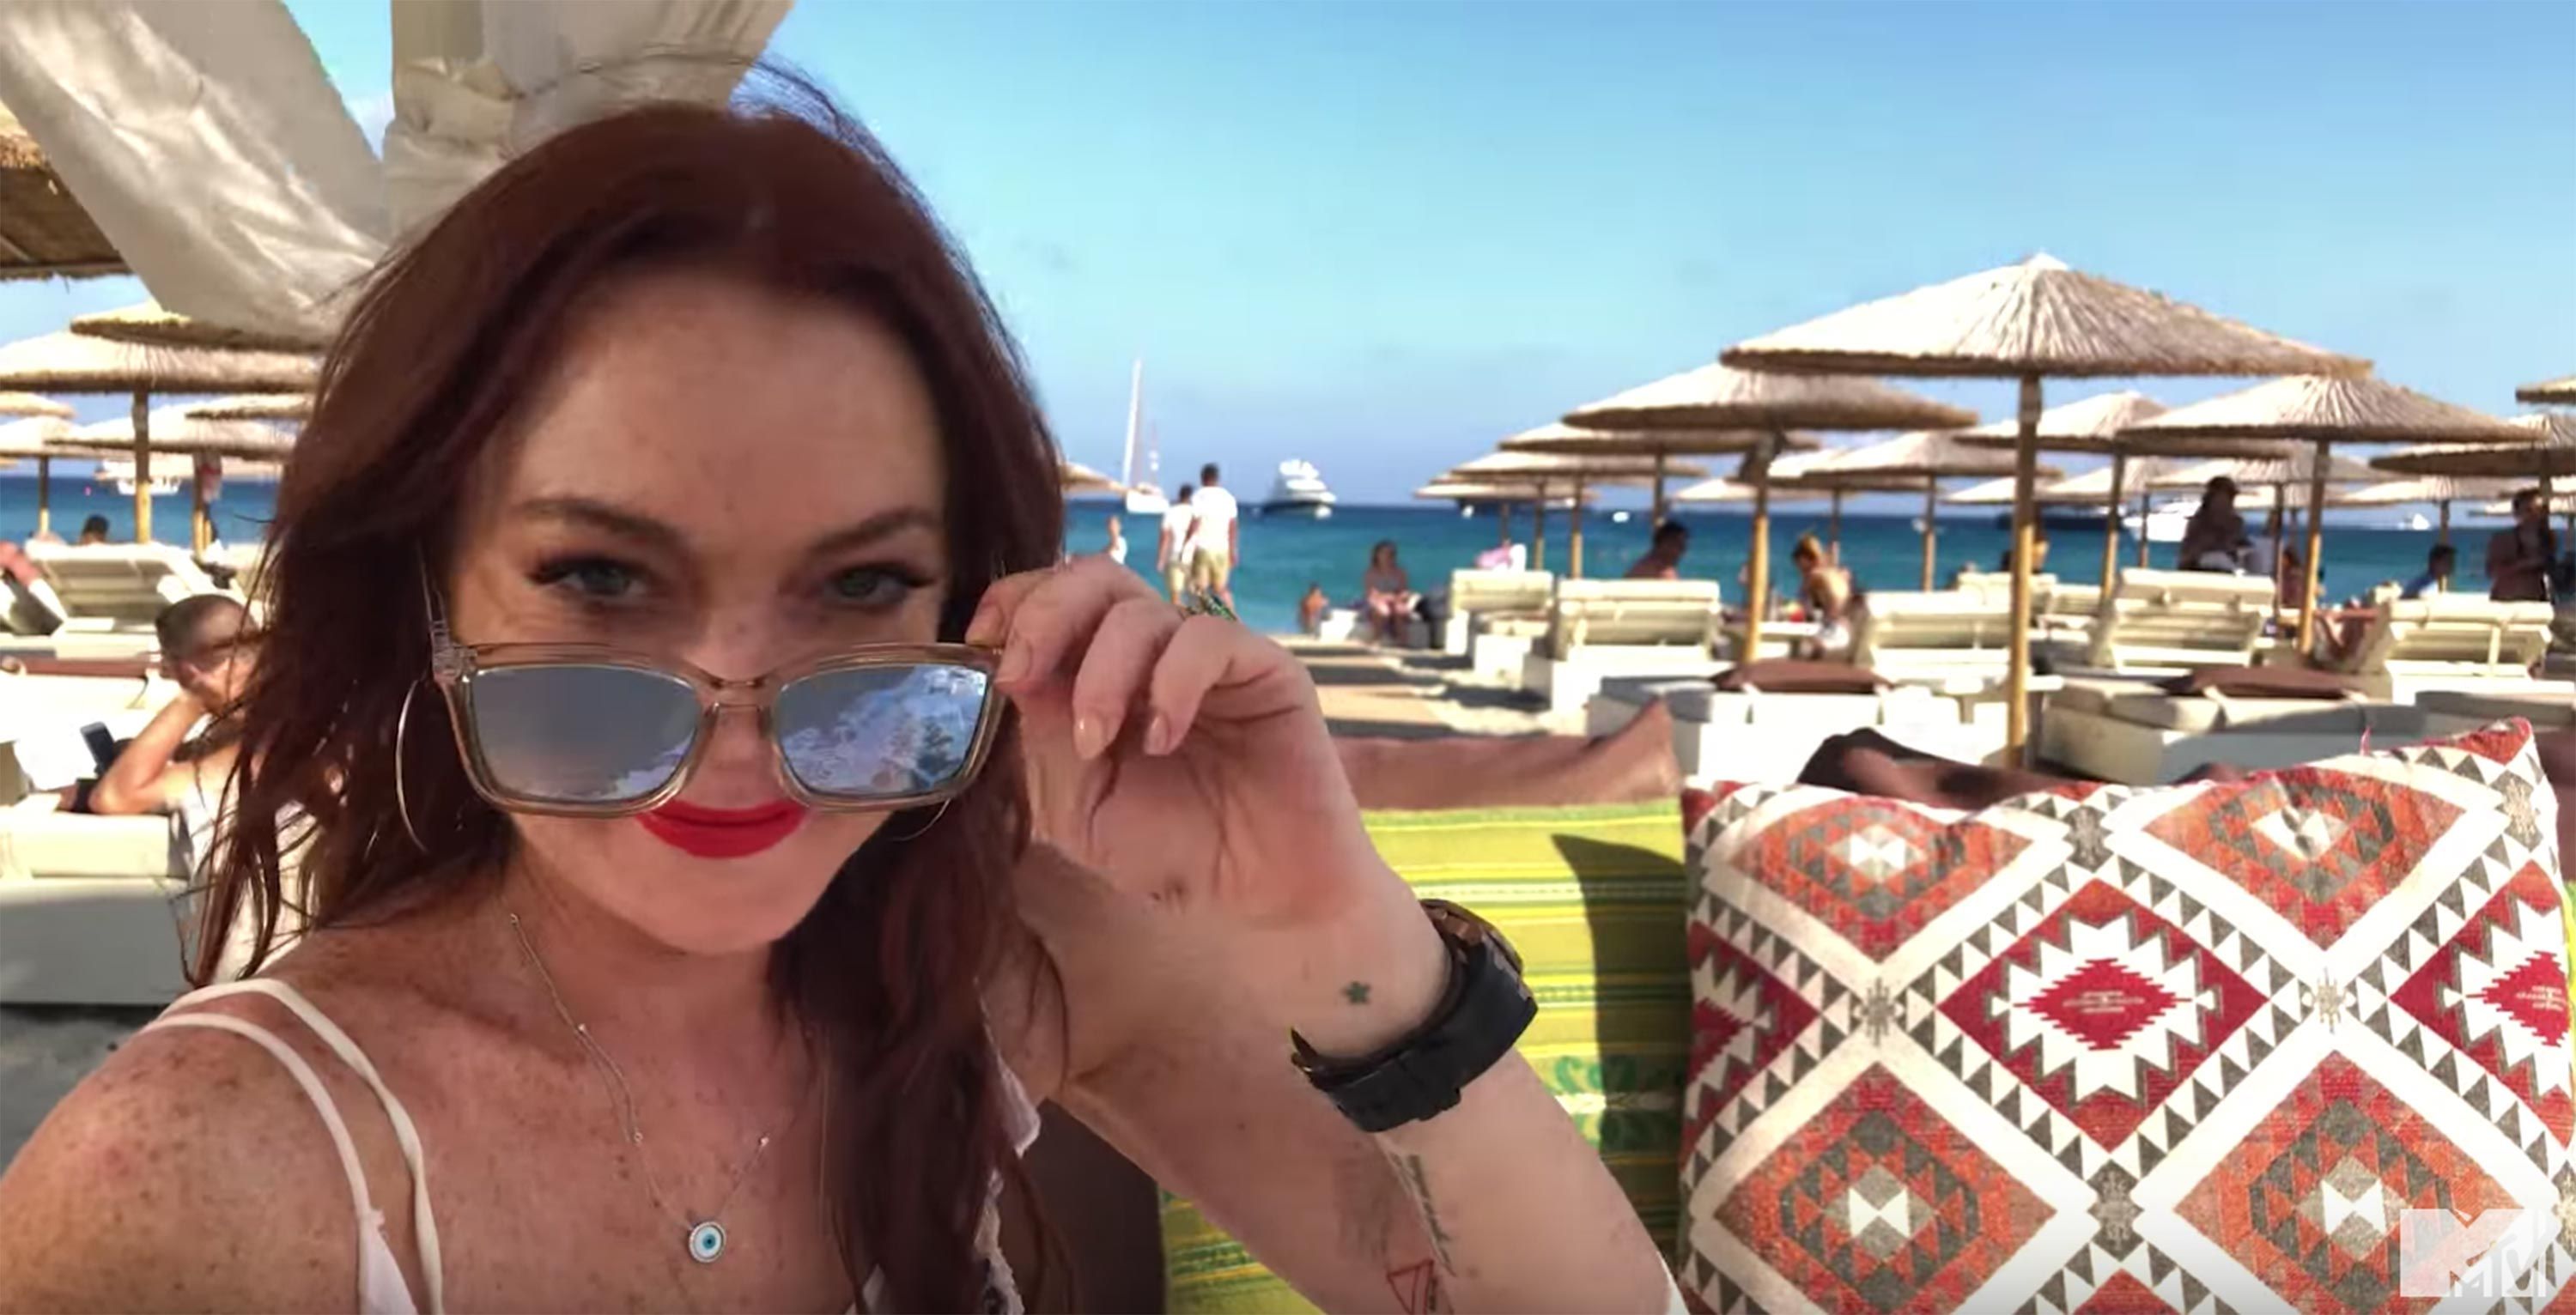 Lindsay Lohan lounging beach side at her resort